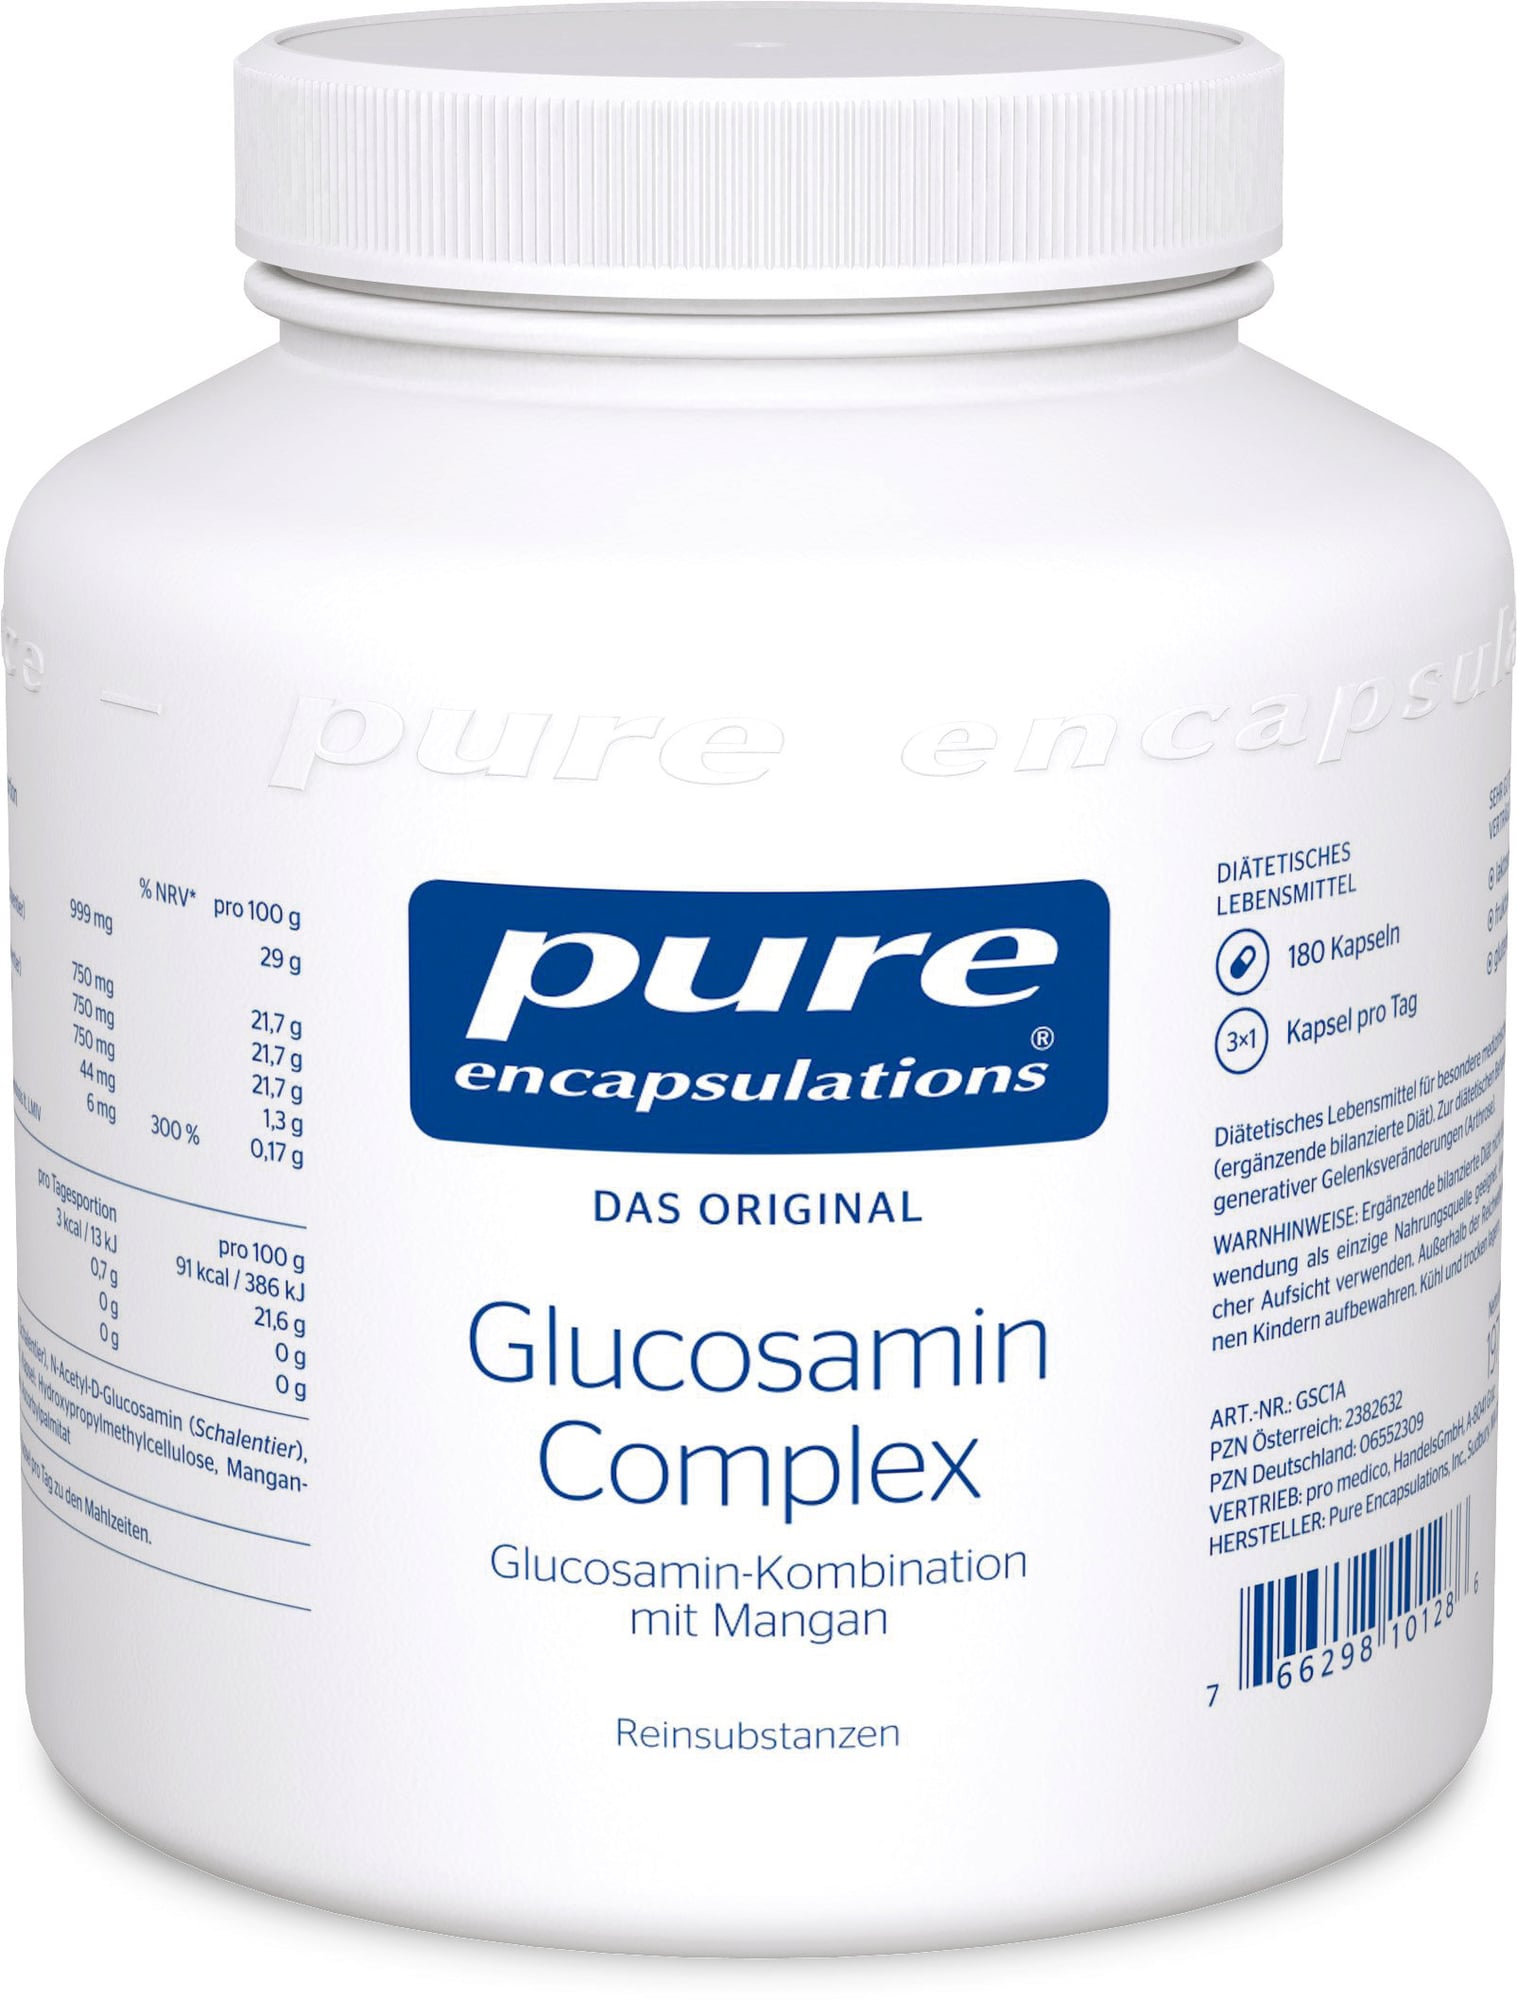 pure encapsulations Glucosamin Complex - 180 Kapseln